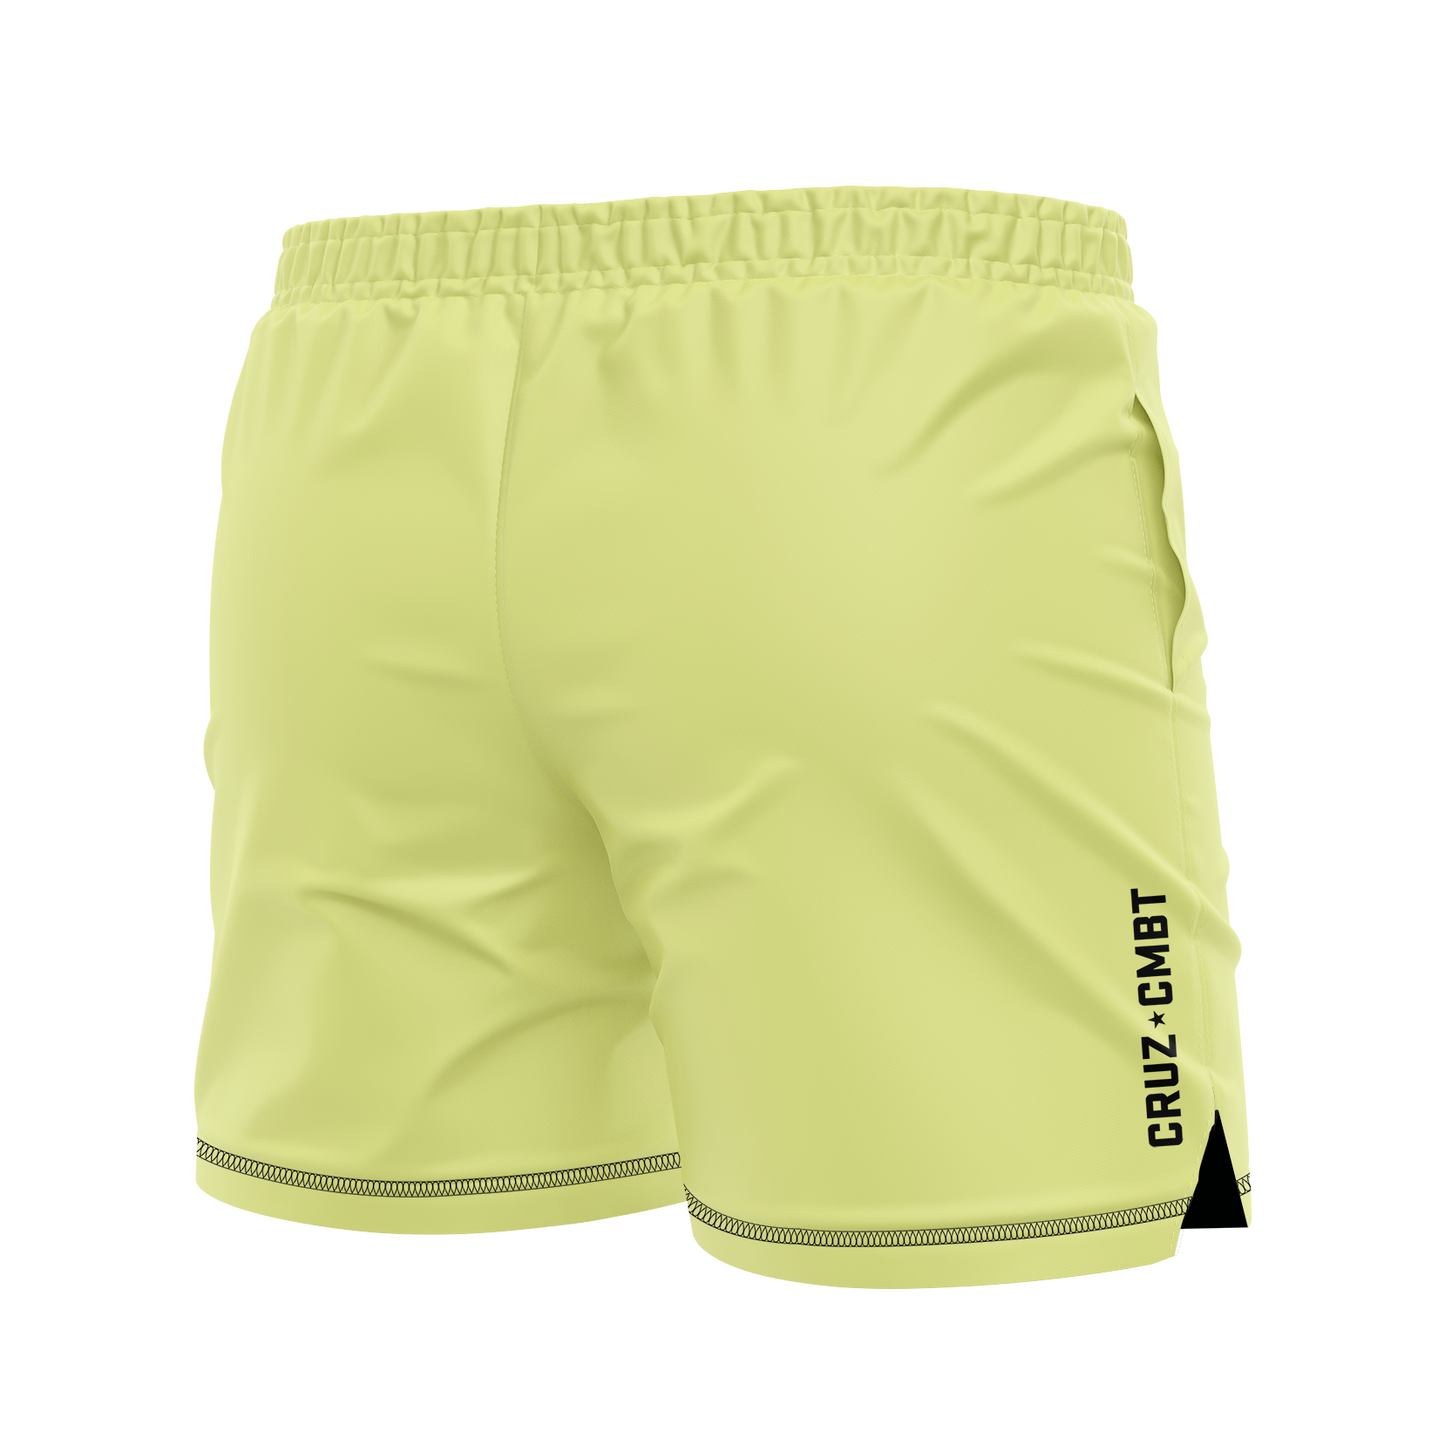 Base Collection men's FC shorts, limoncello